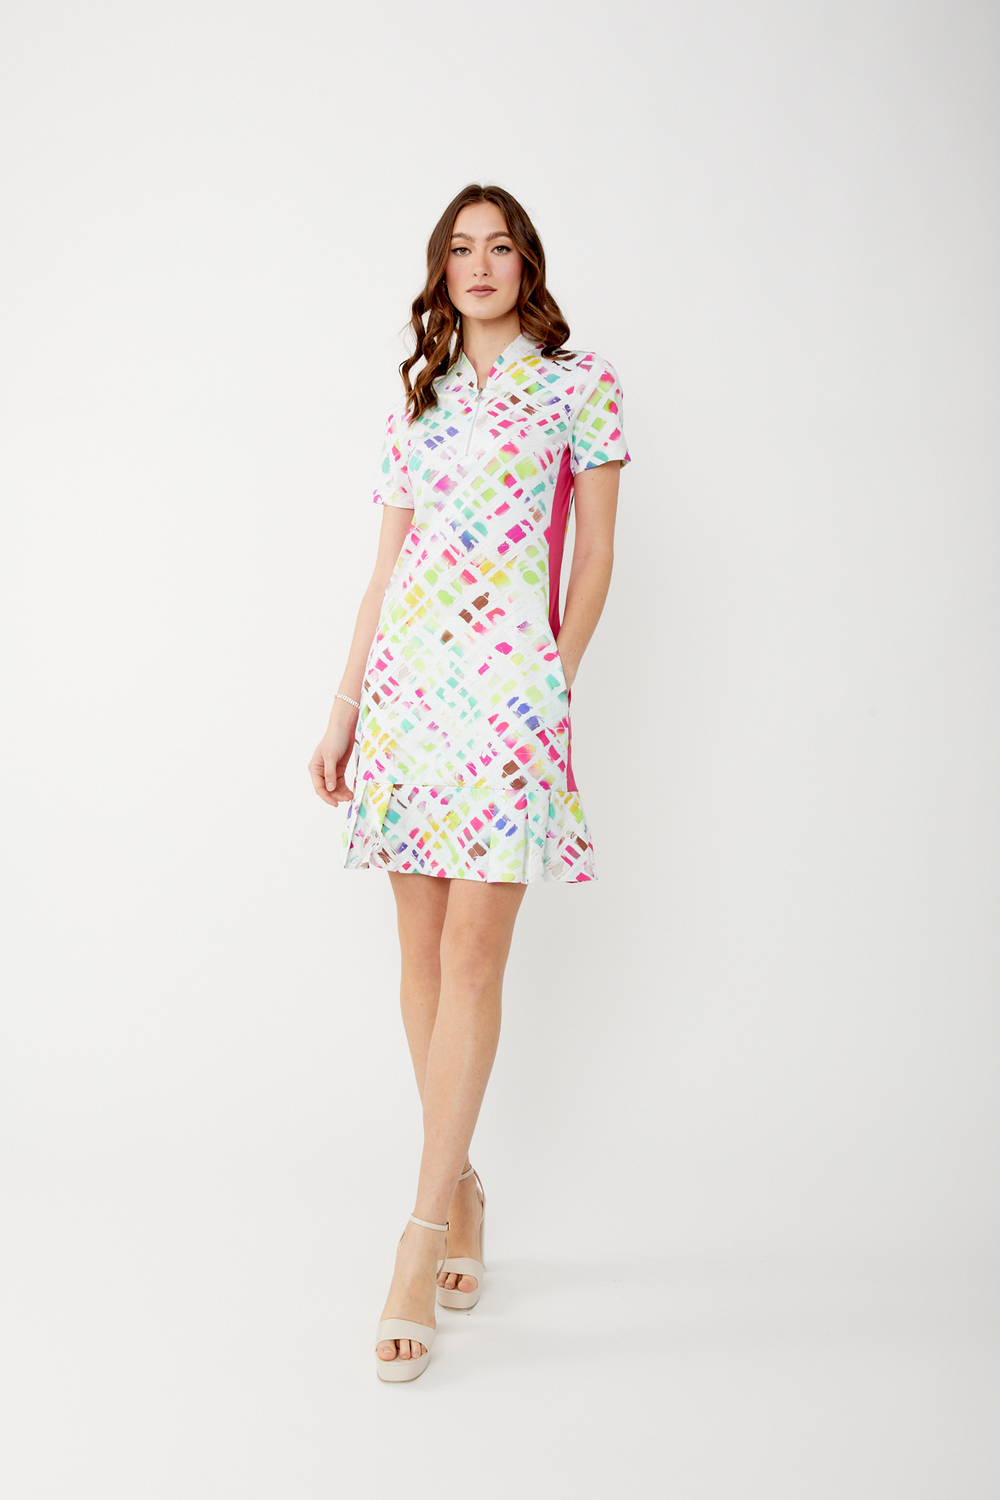 Geometric Pleated Mini Dress Style 34436. As Sample